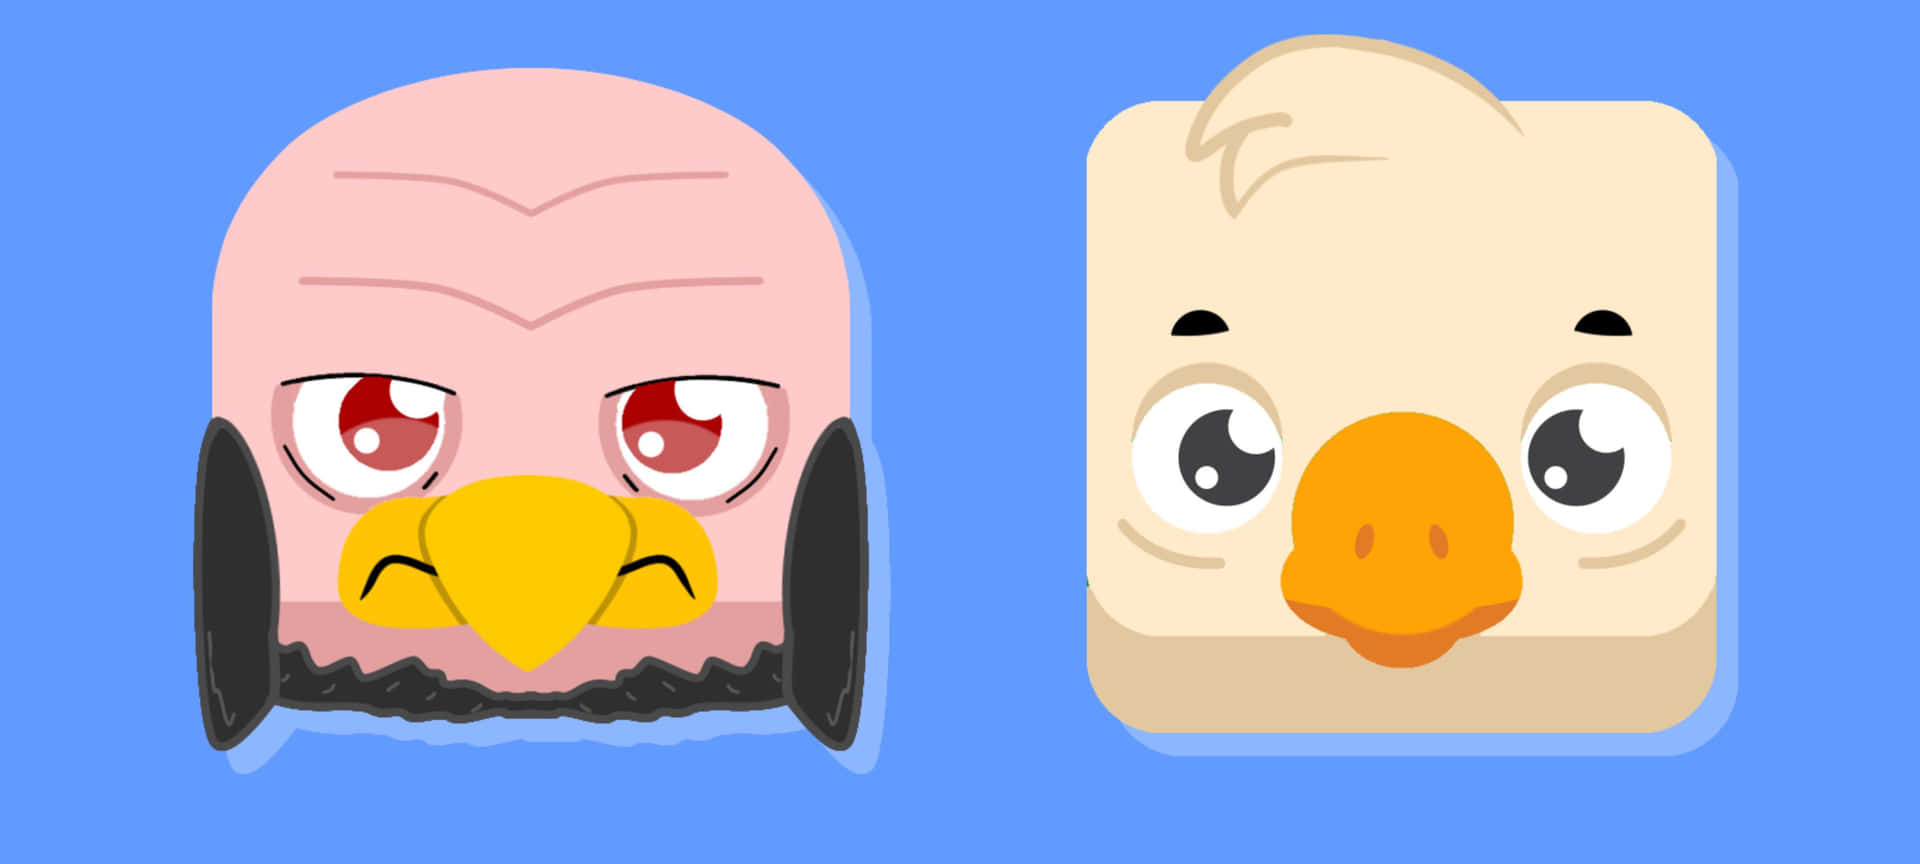 Angry Birdand Cute Duck Cartoon Characters Wallpaper